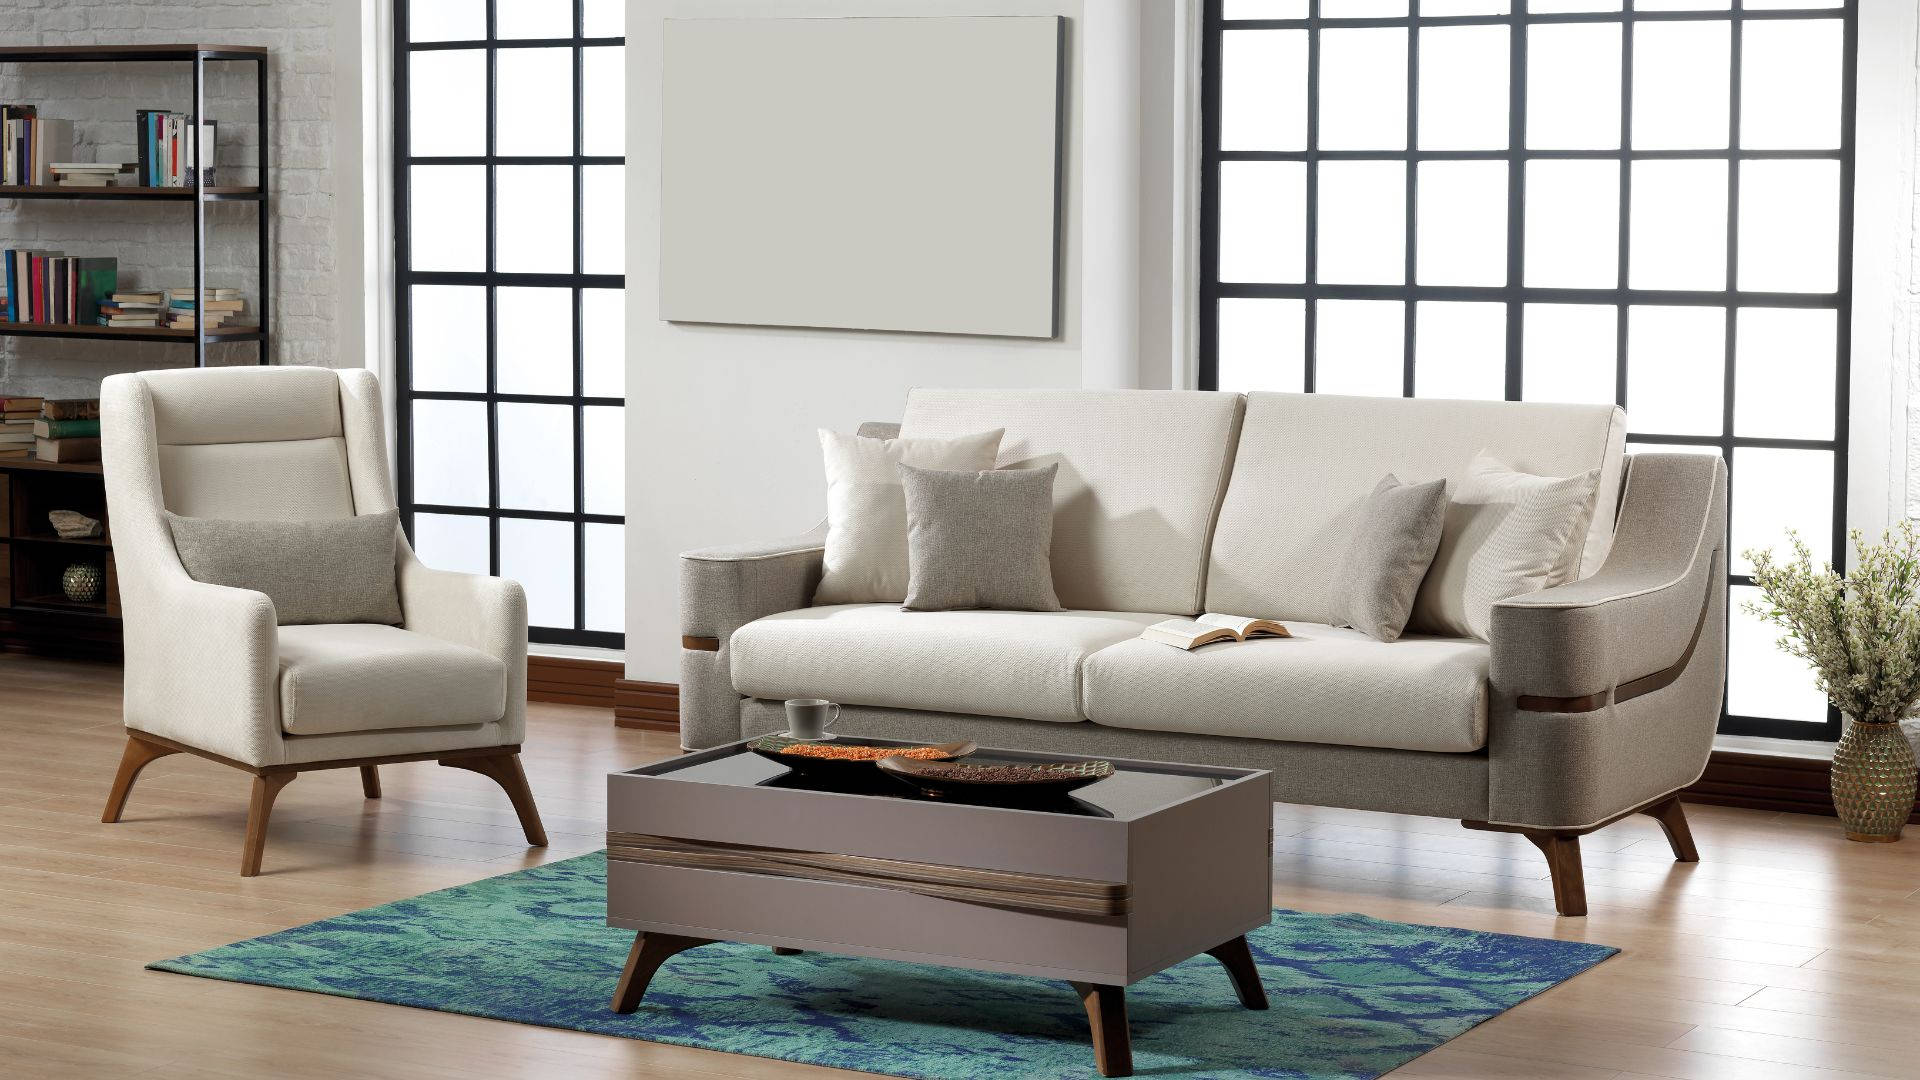 Beige-themed Living Room Furniture Background